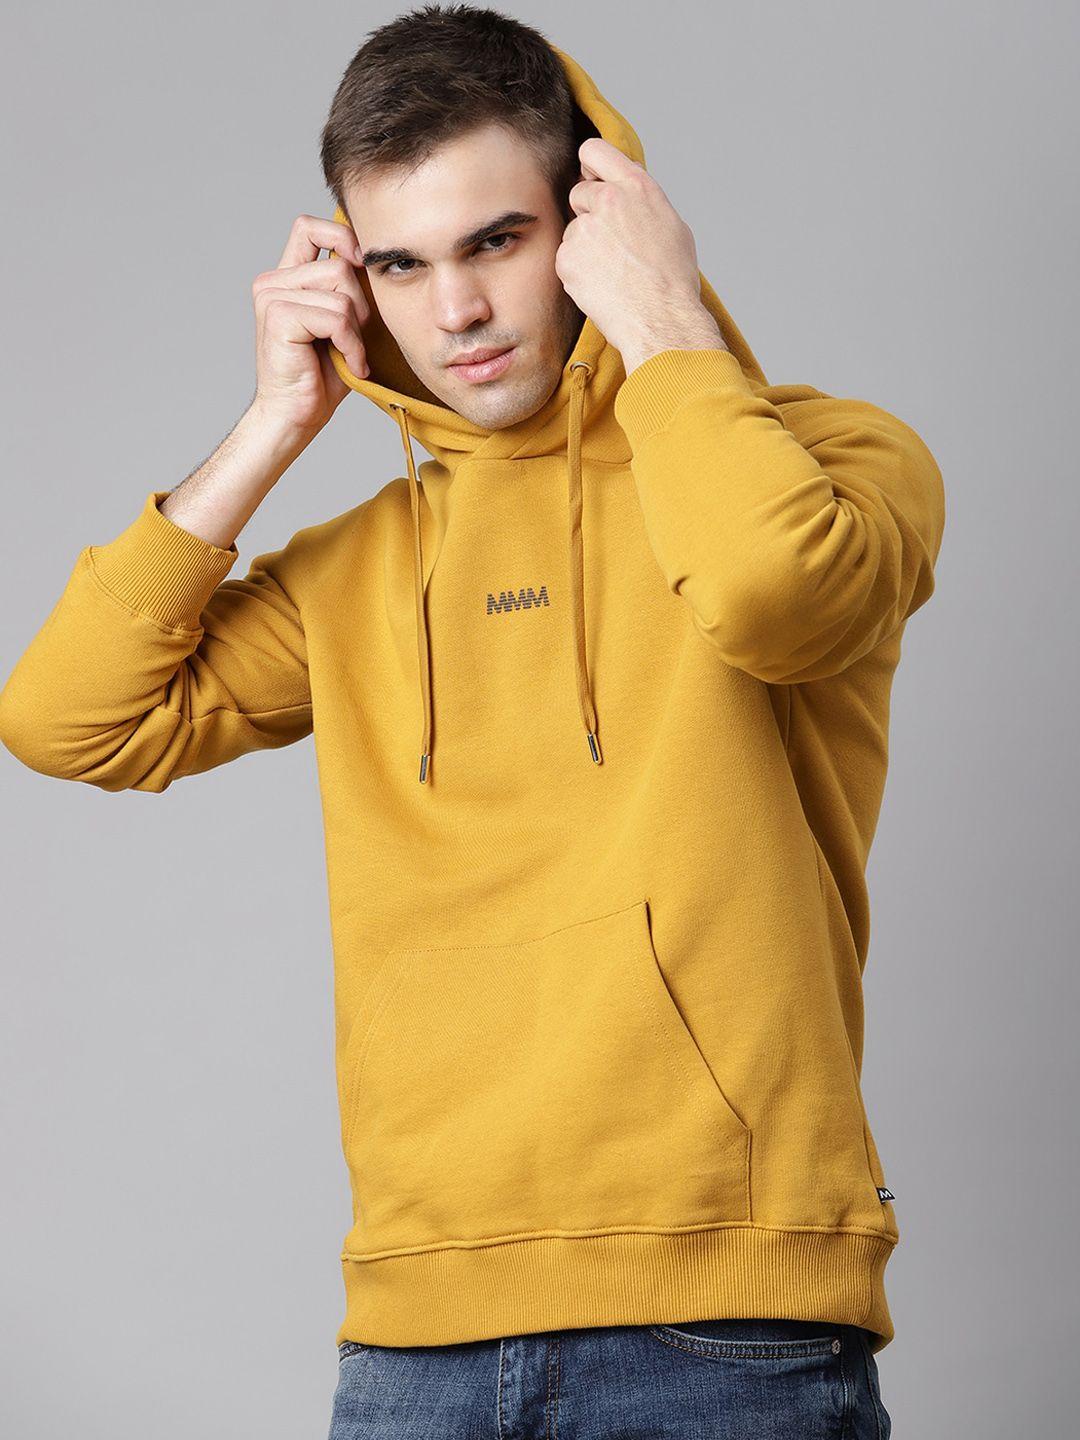 matinique-men-yellow-hooded-sweatshirt